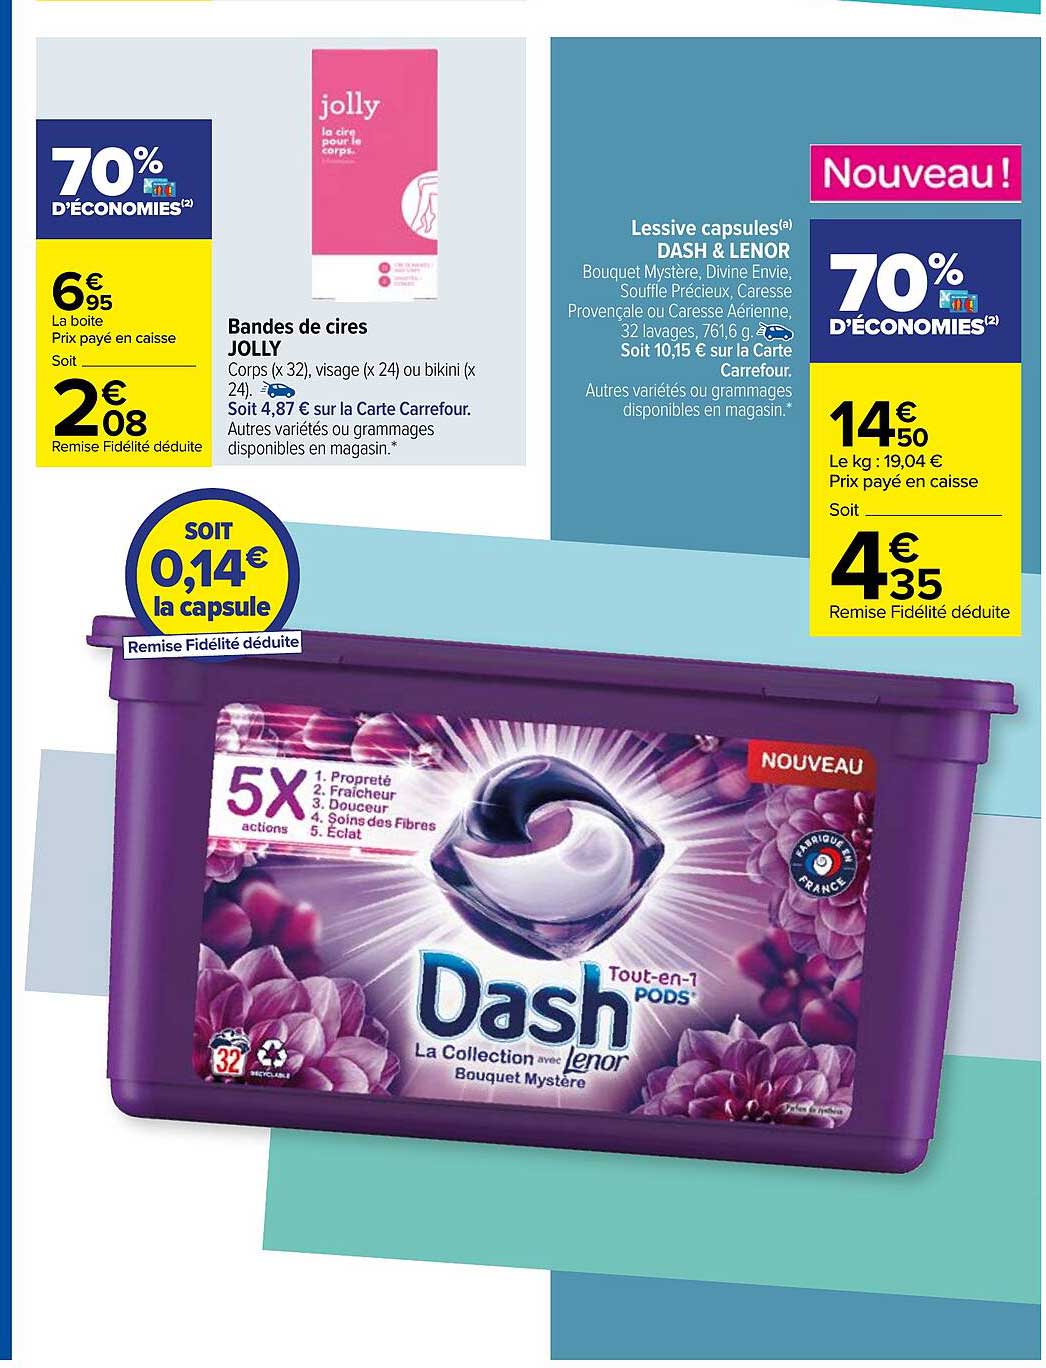 Dash Lessive Capsule Tout-En-1 Pods Jasmin & Rose De Mai, 19 capsules